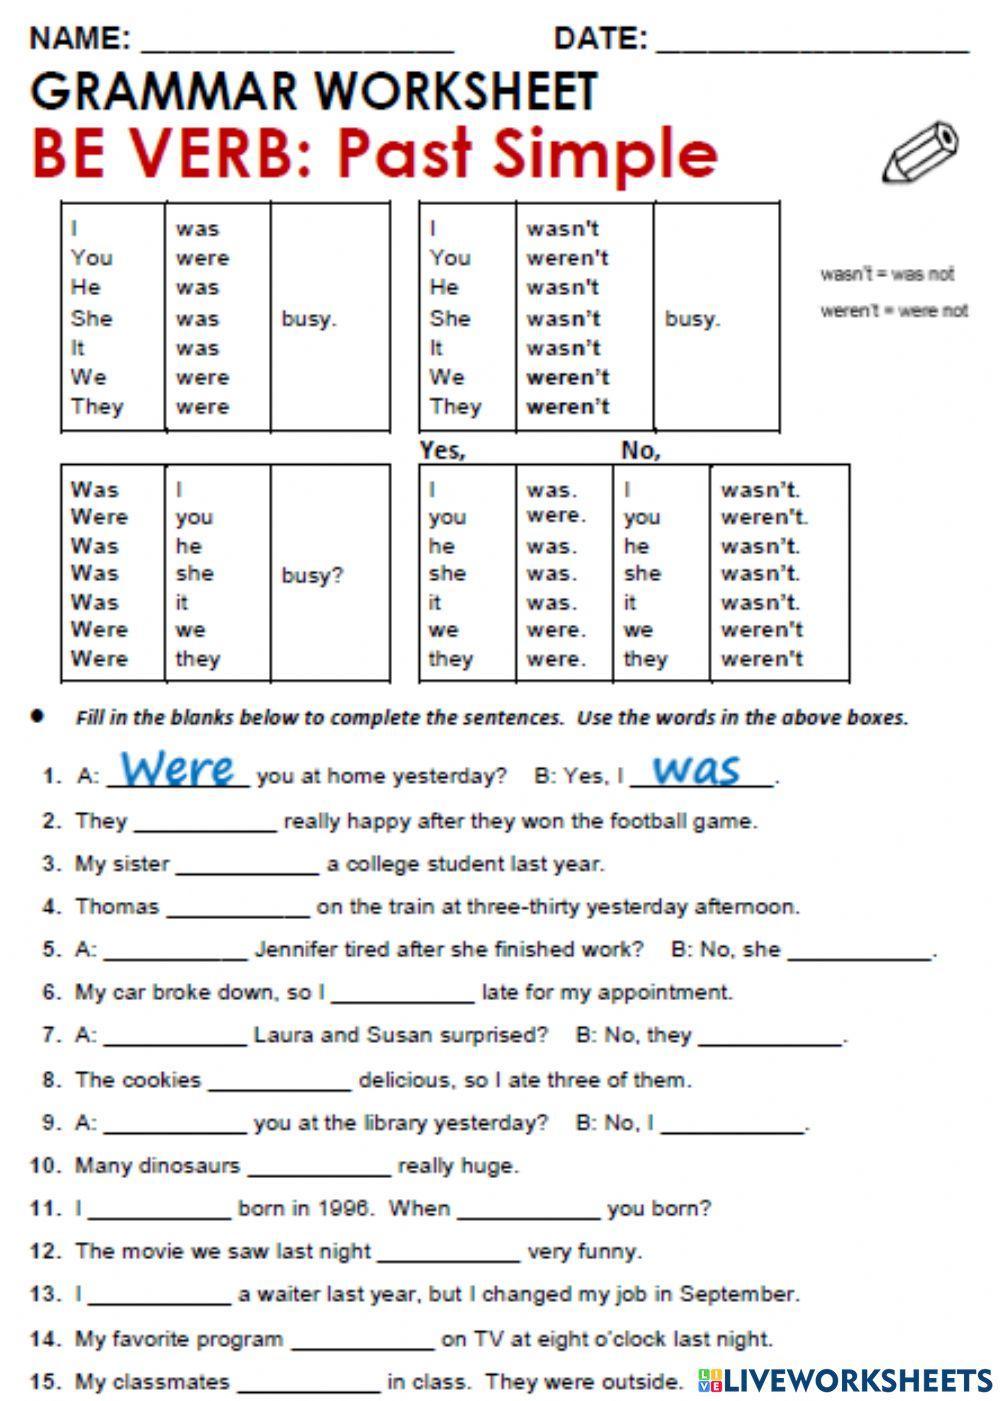 homework verbs